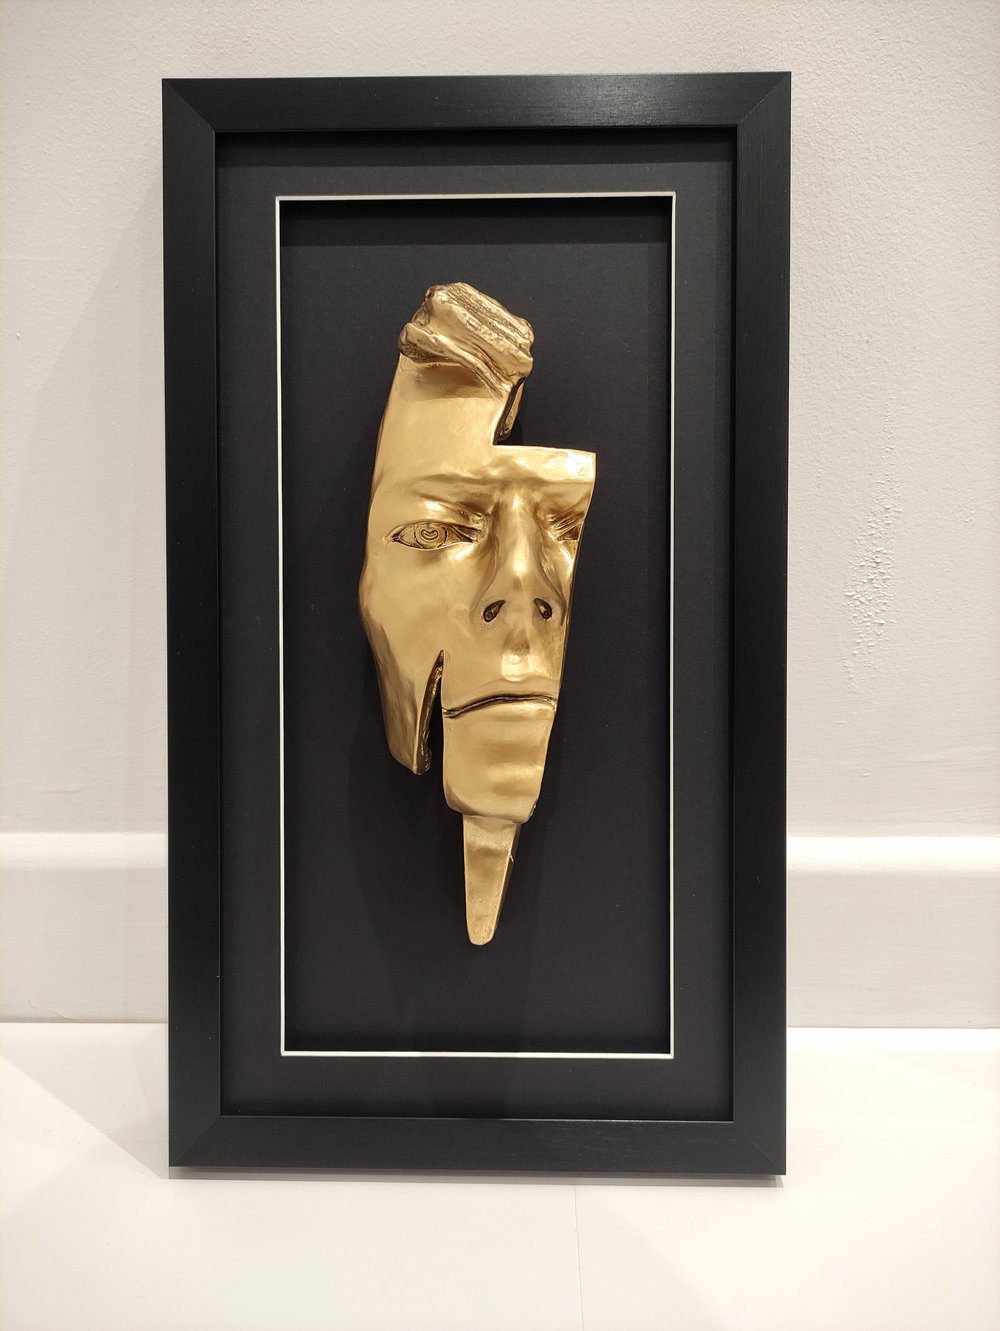 Chrome/Rose Gold Resin 'Flash' Metallic Effect - David Bowie Sculpture